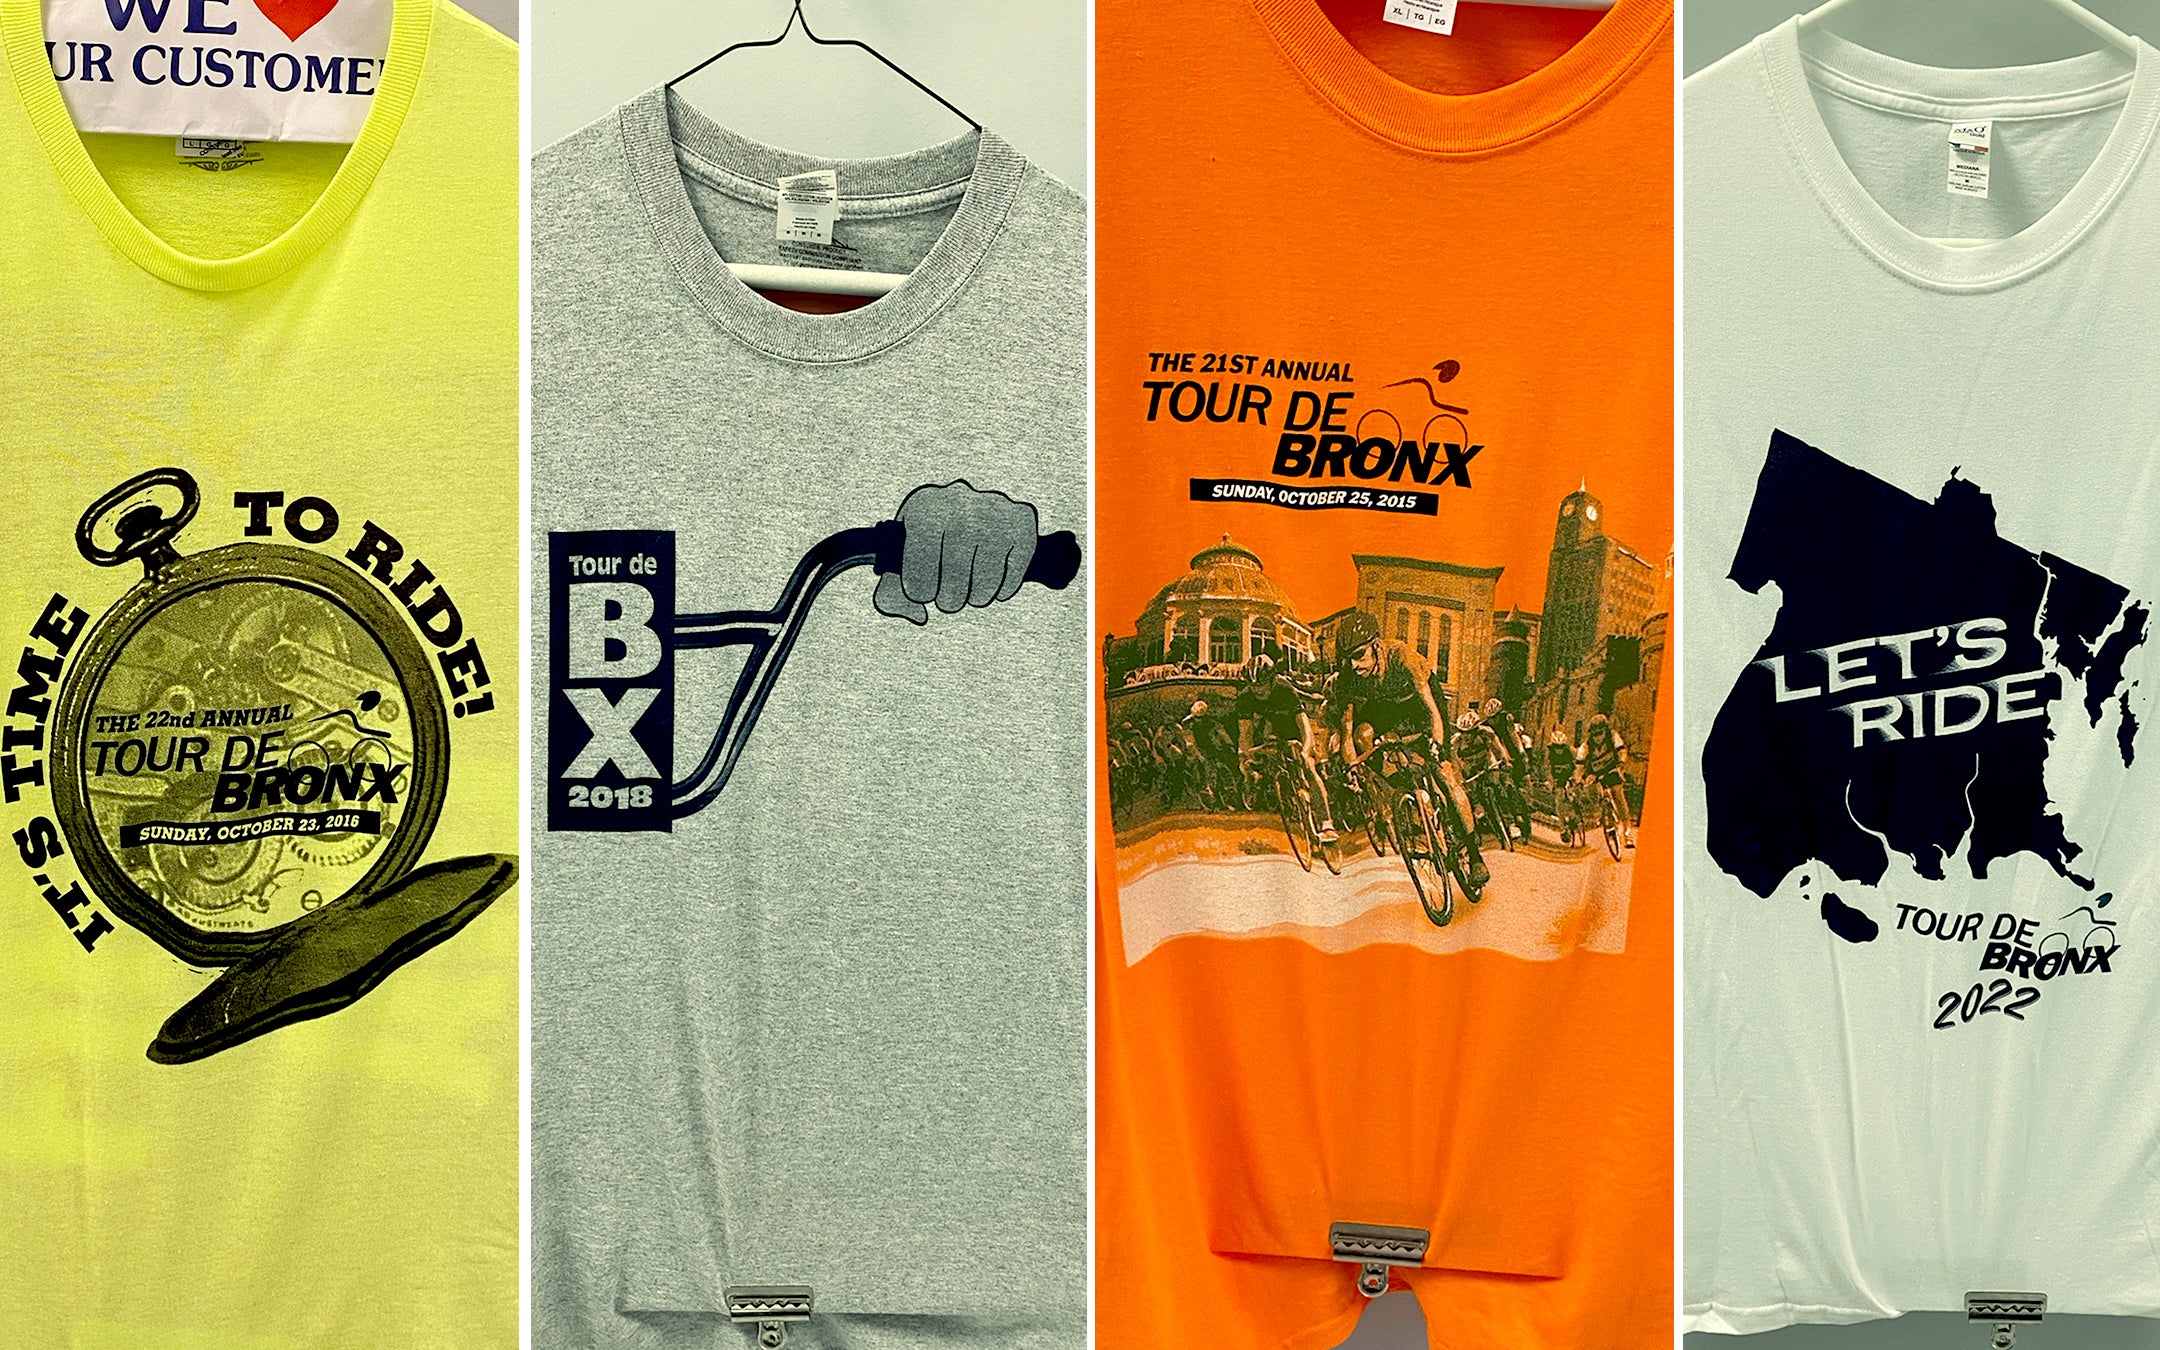 Previous Tour De Bronx T-Shirts